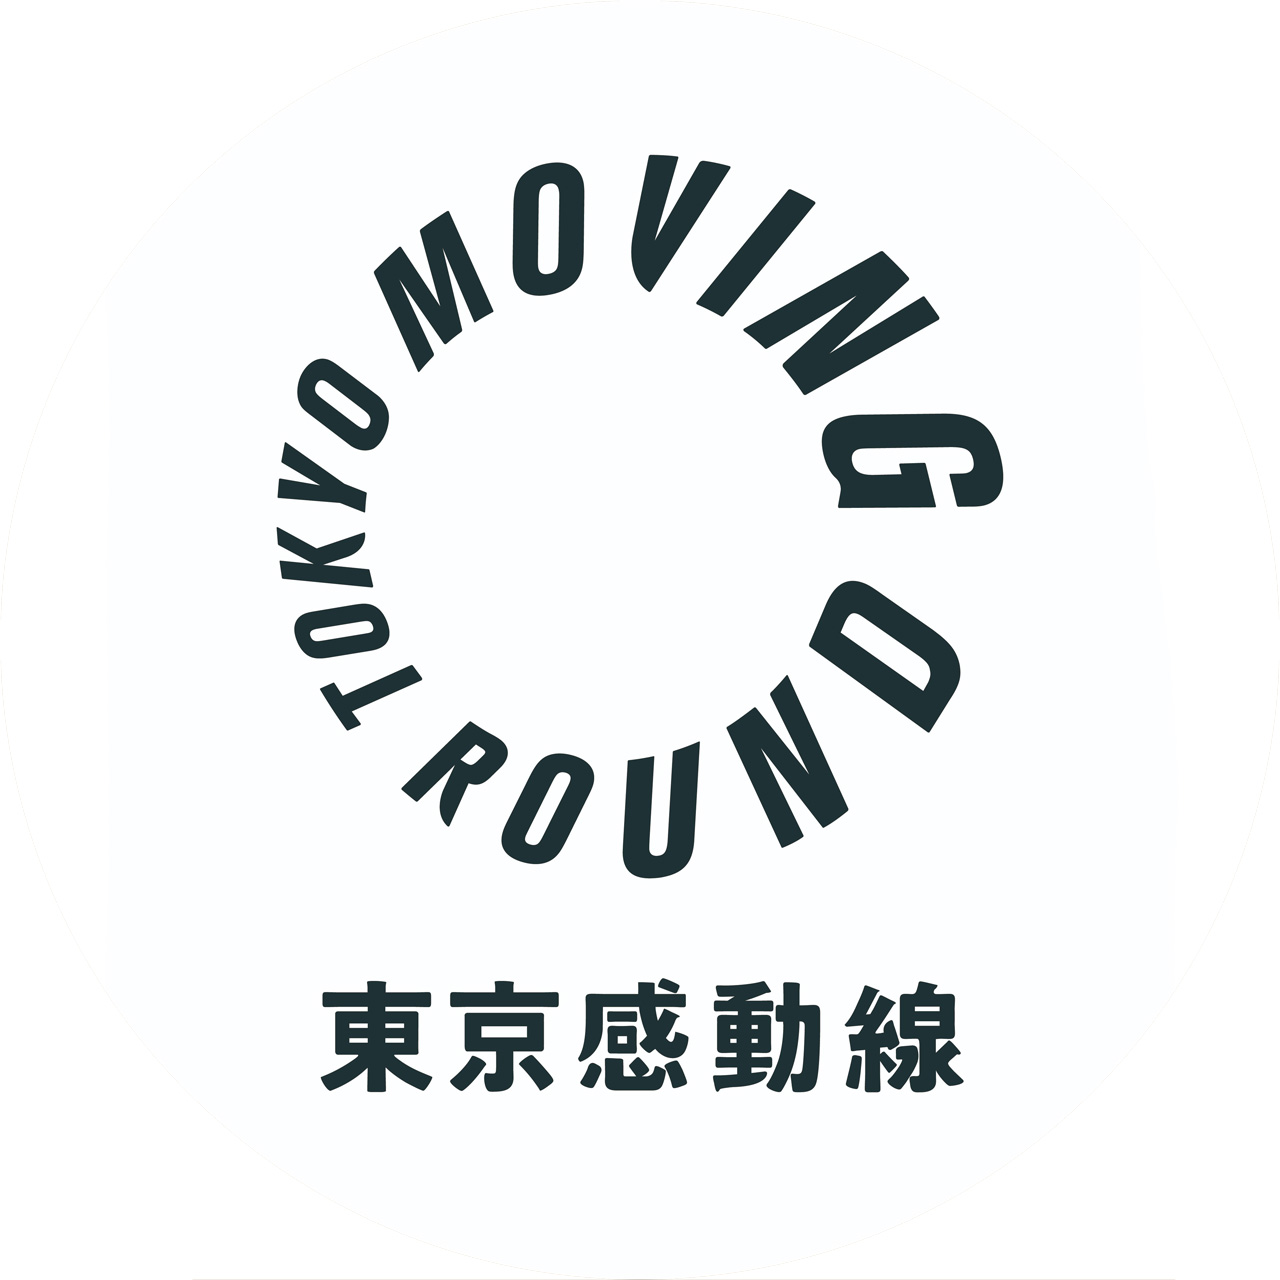 東京感動線ロゴ